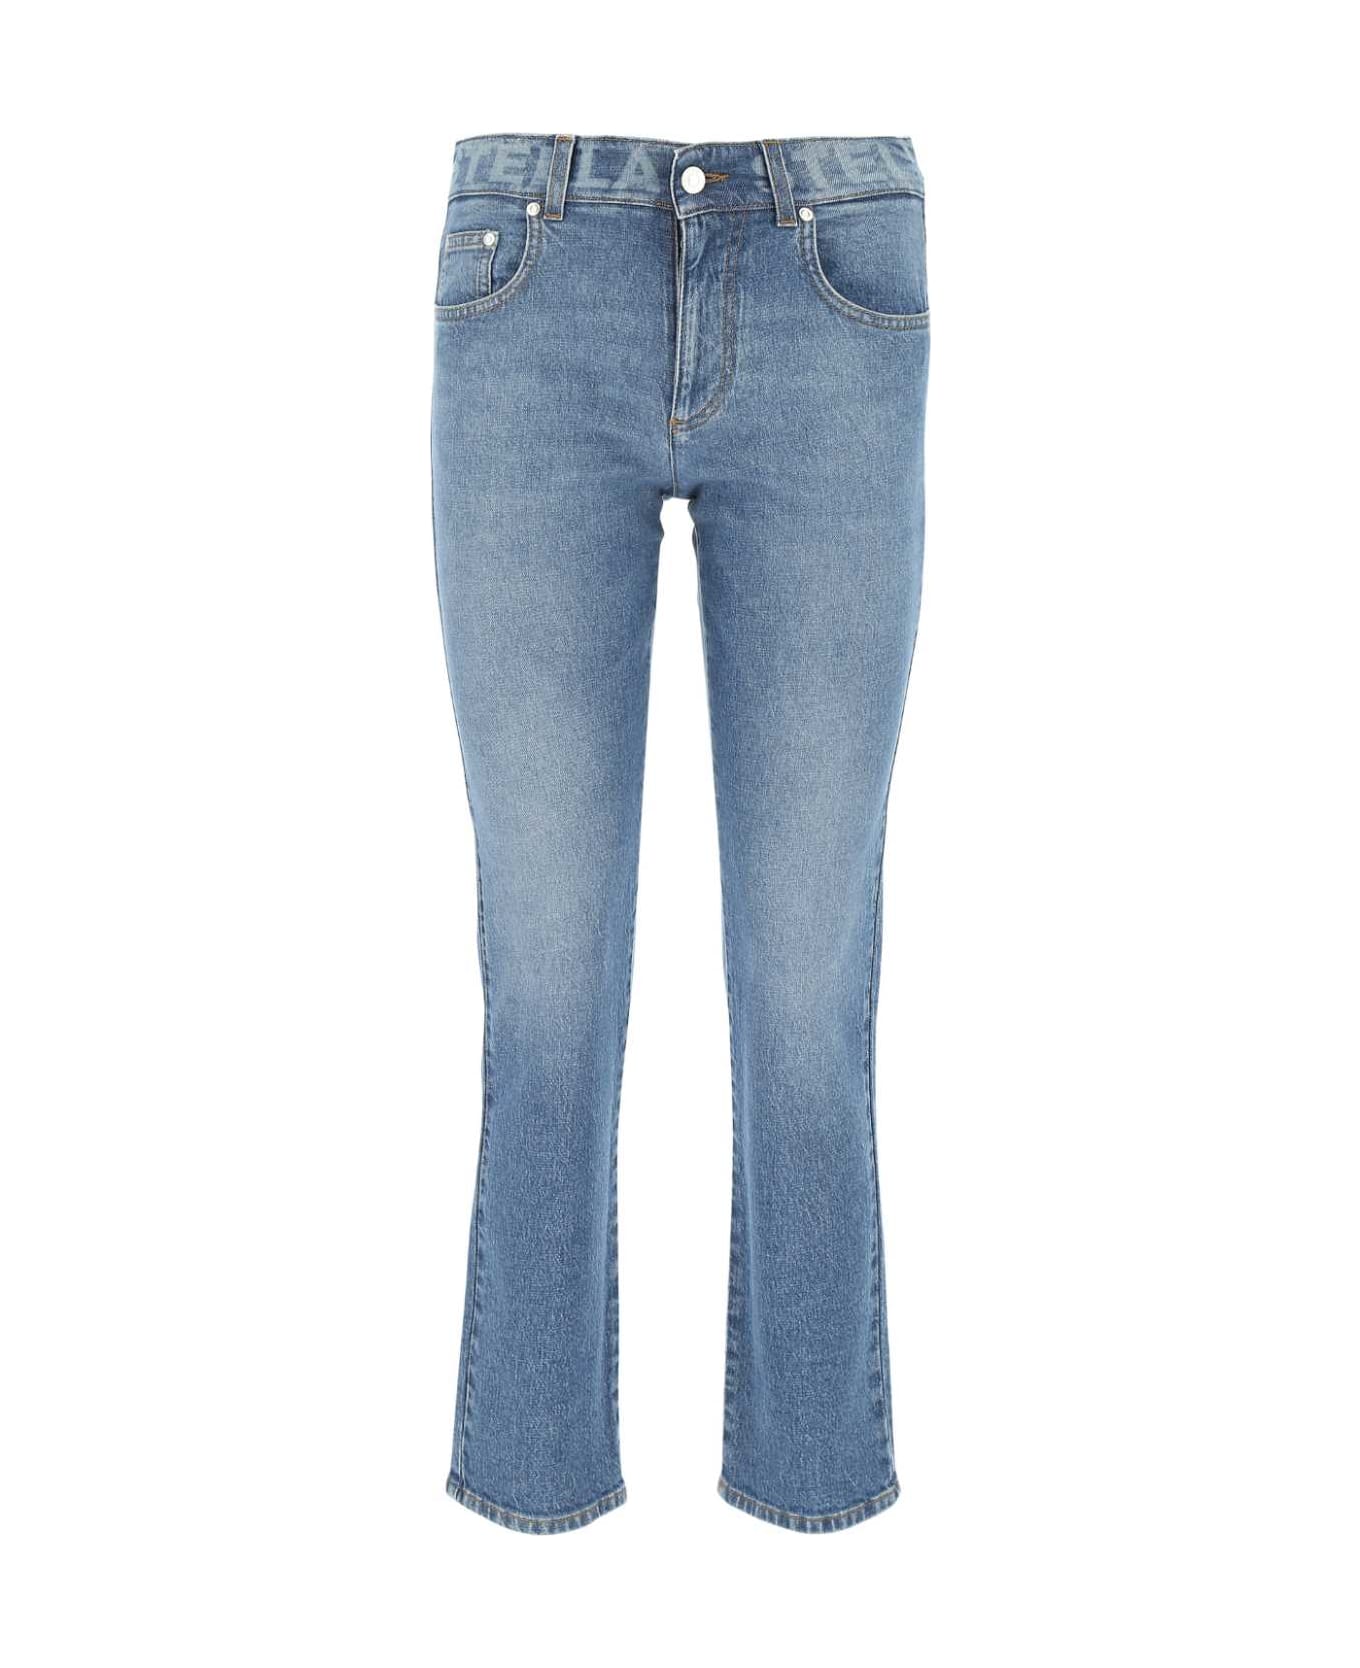 Stella McCartney Stretch Denim Jeans - 4402